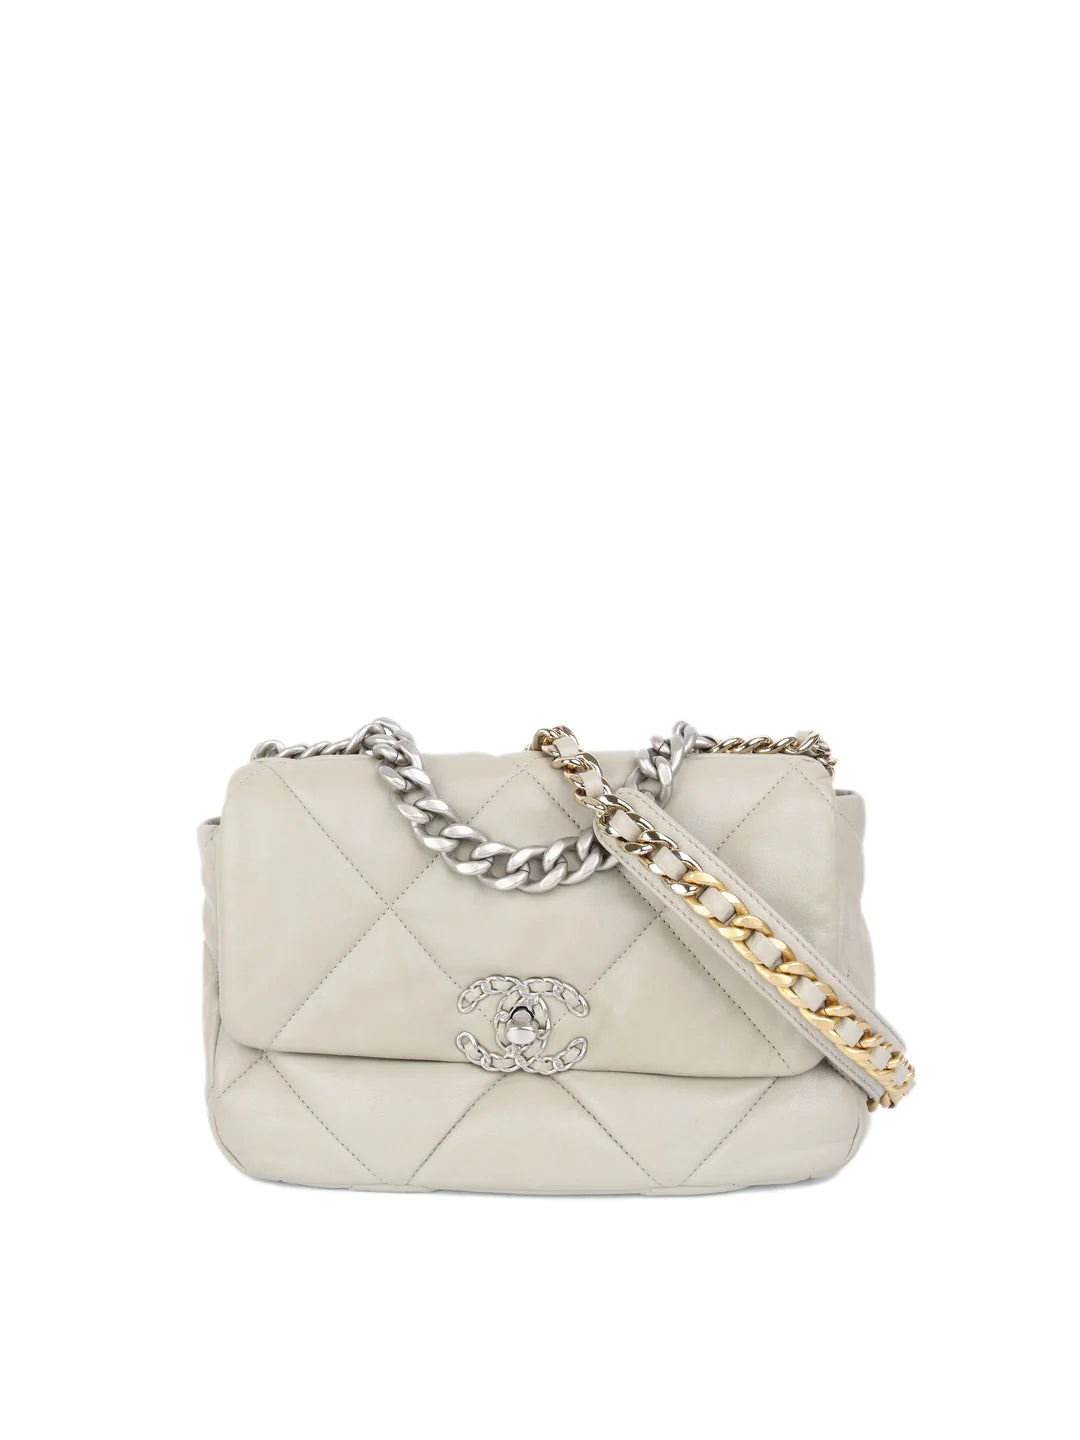 Chanel Medium Grey Lambskin 19 Bag